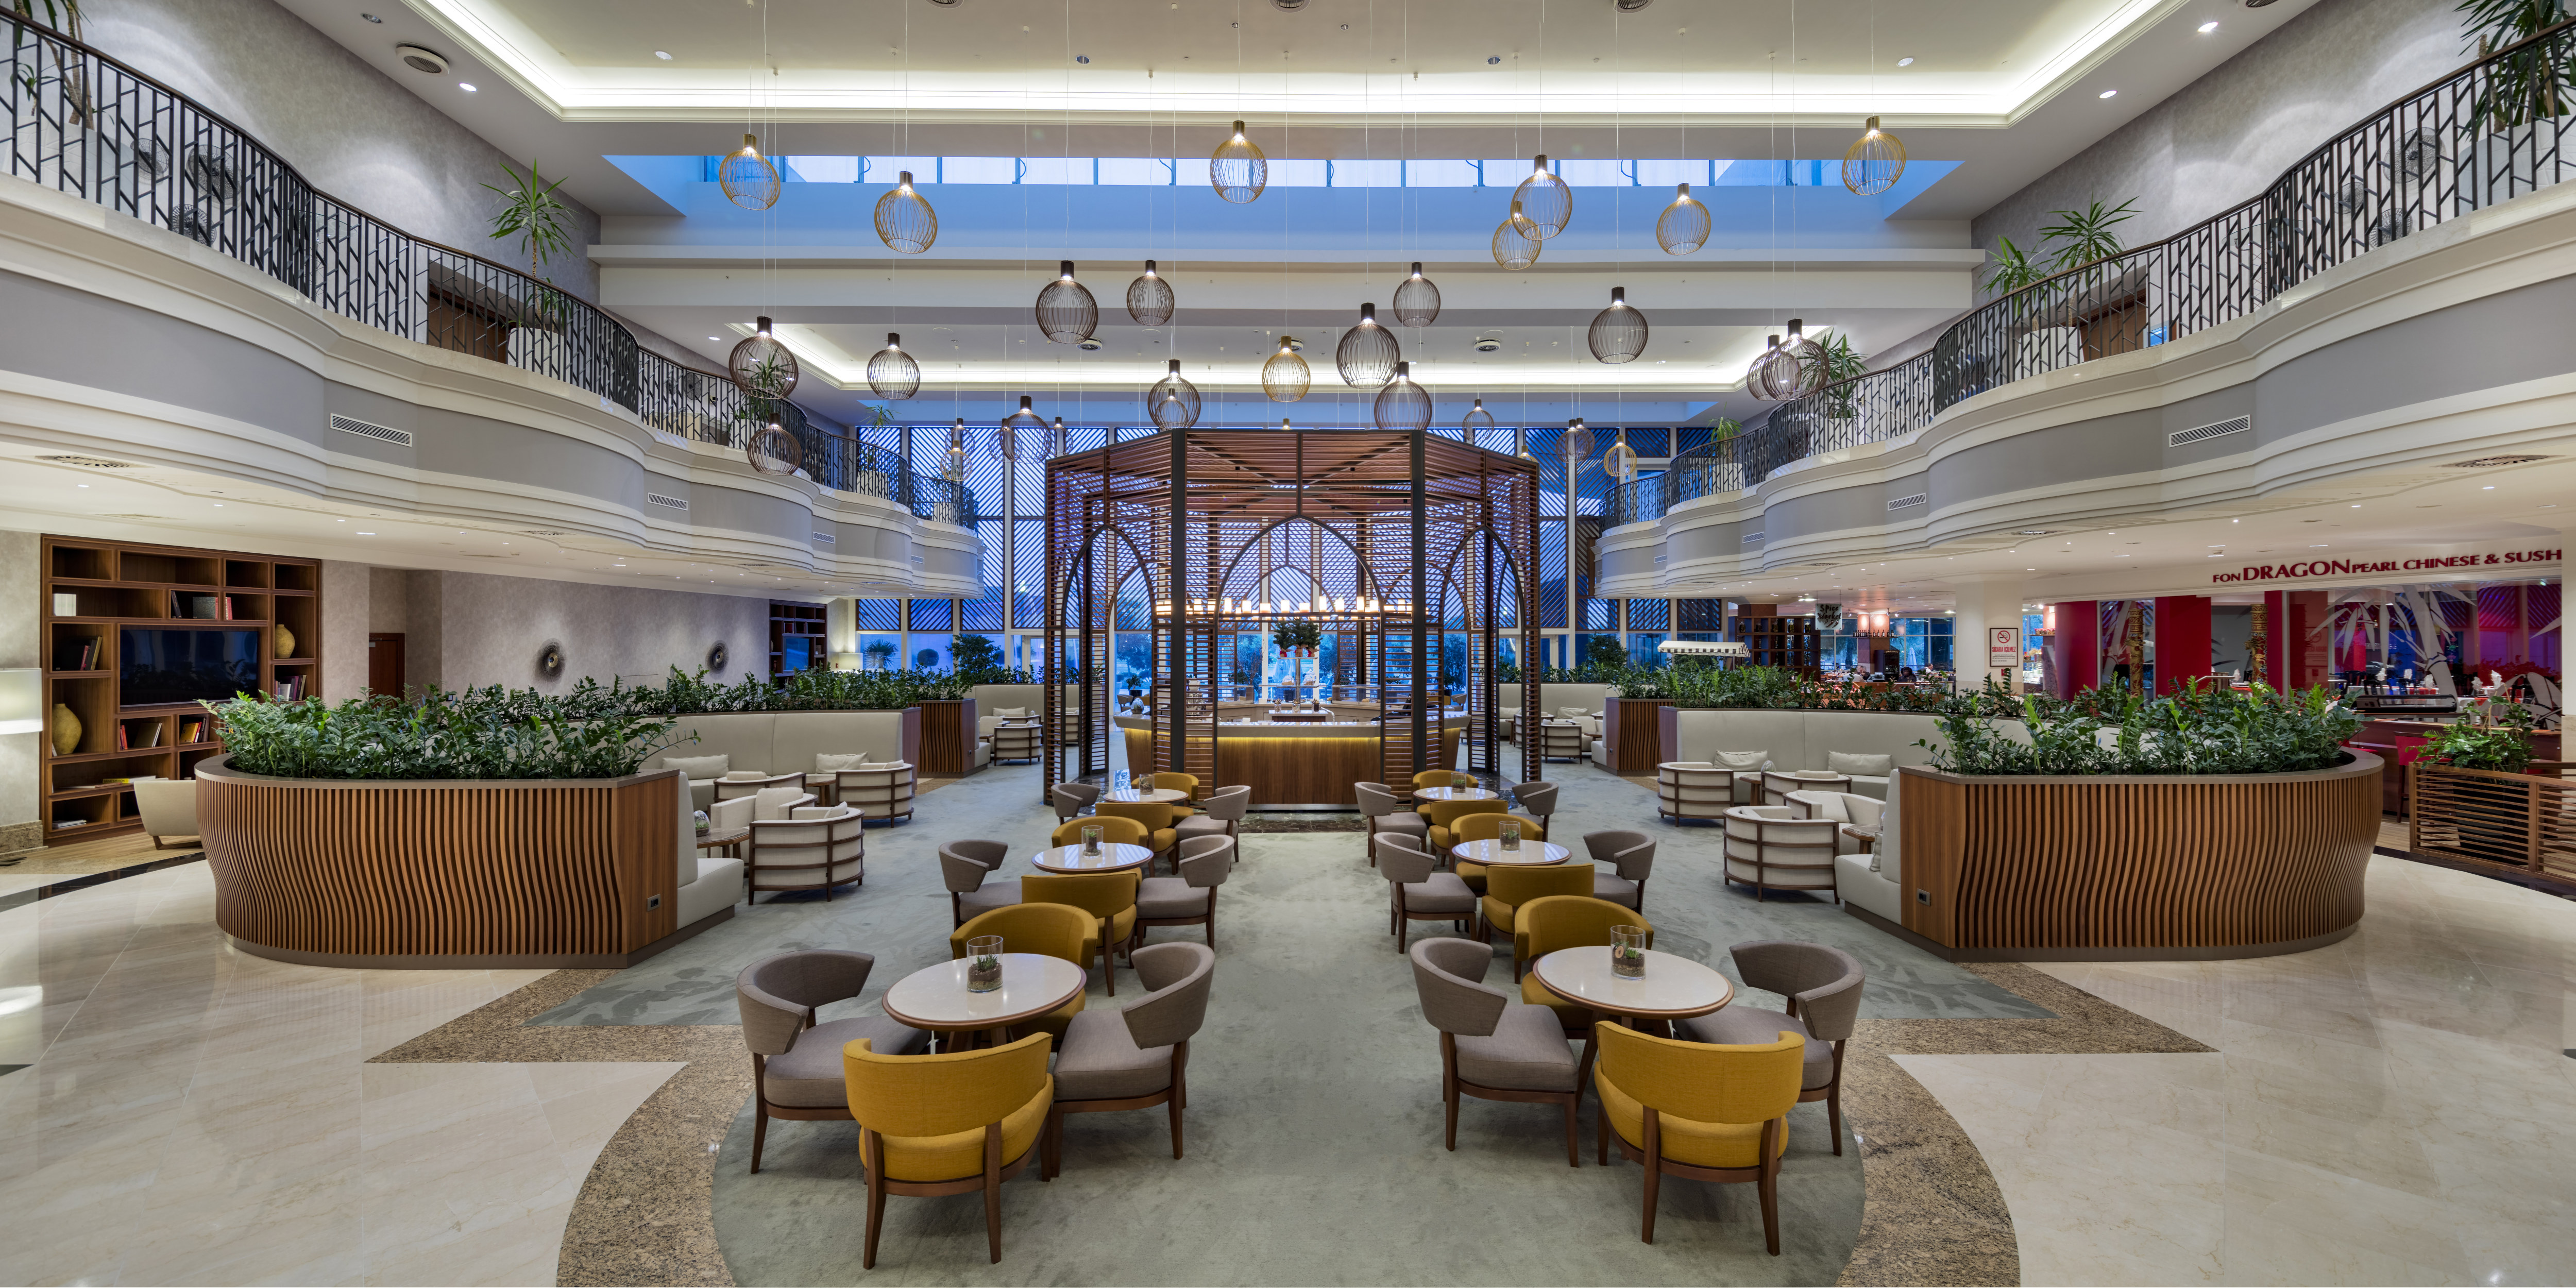 Adana HiltonSA Lobby Gallery Lounge